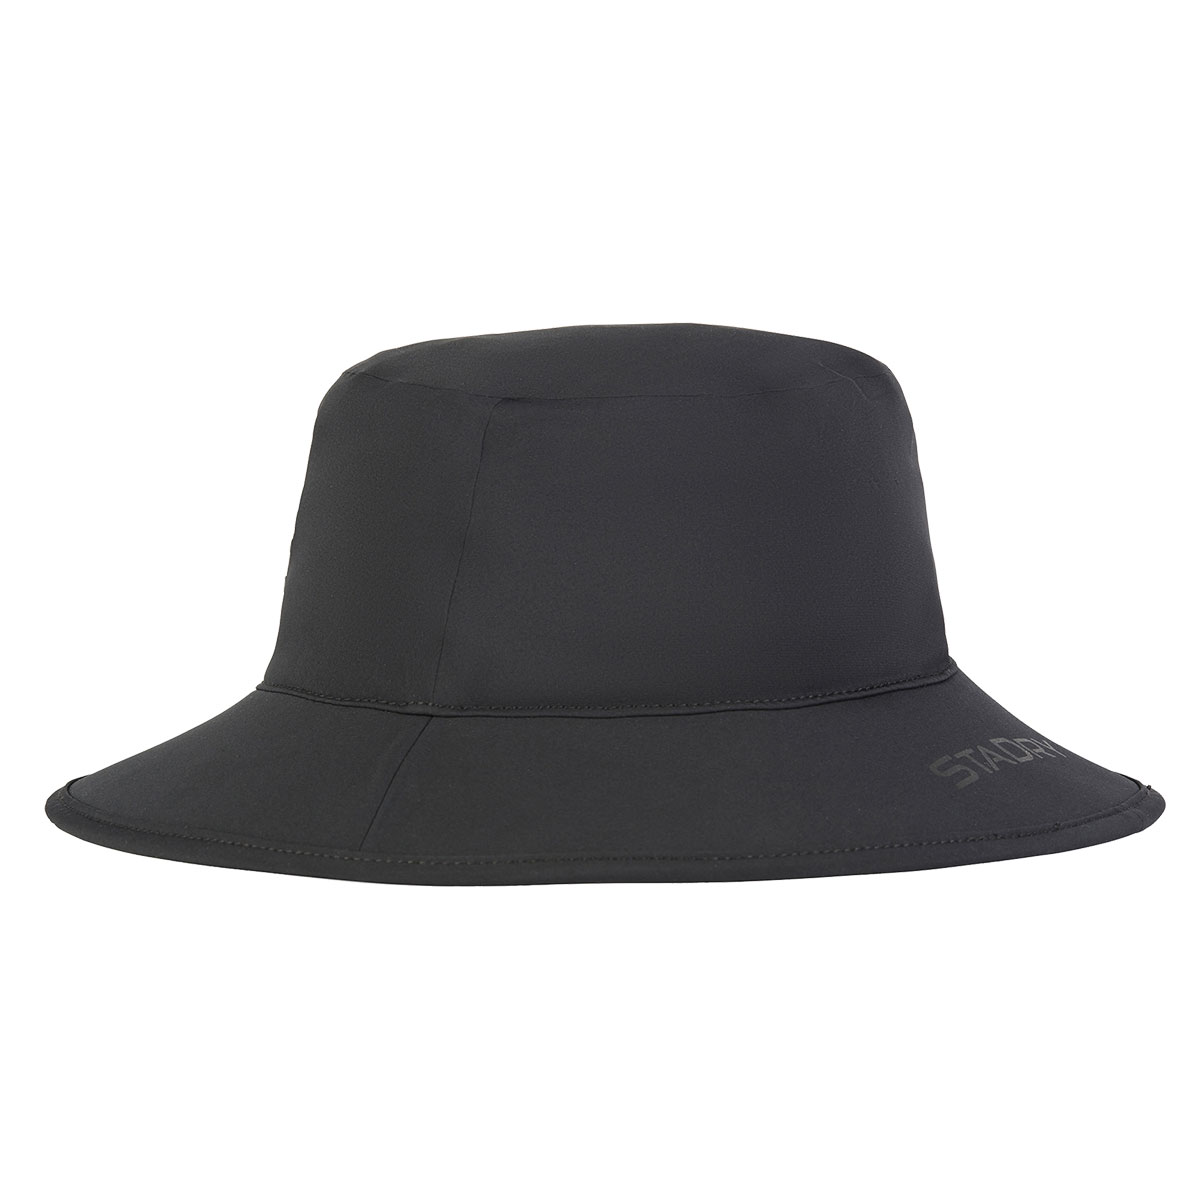 Titleist StaDry Bucket Hat from american golf